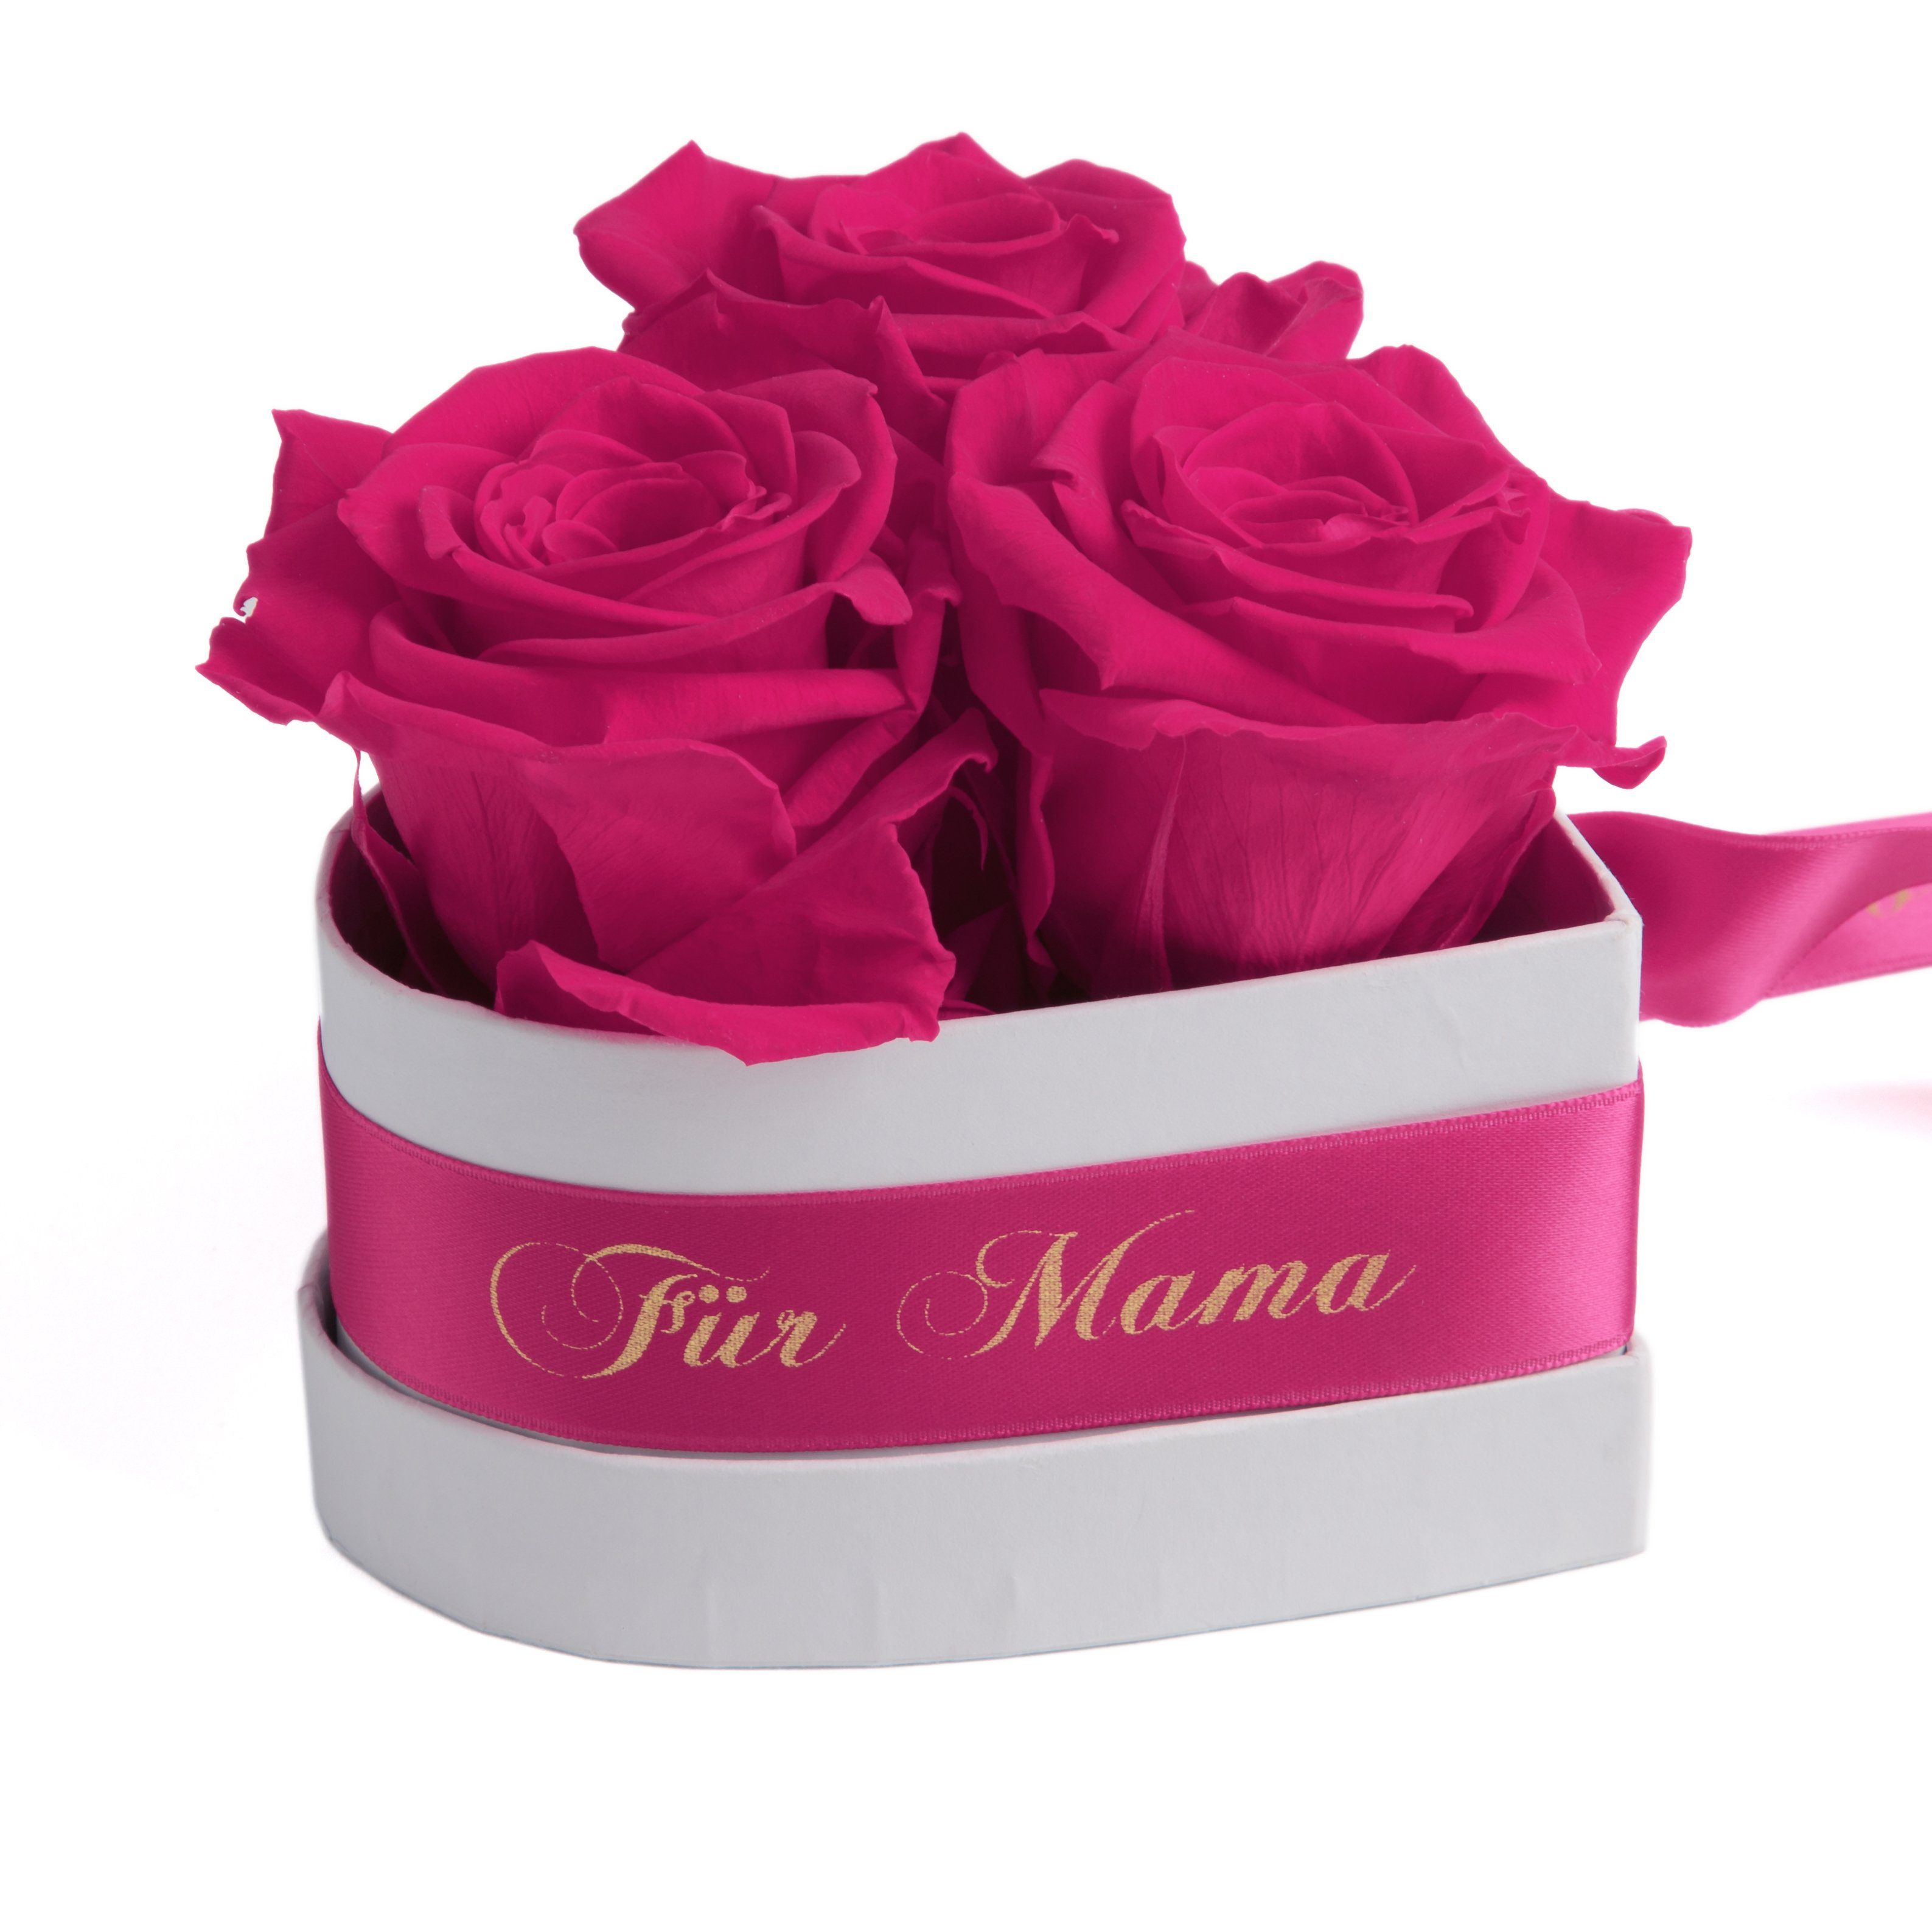 Pink, 3 Rosen Engel ROSEMARIE SCHULZ Heidelberg Engel ohne Flügel nennt Man Mama 3 Infinity Rosen Box Herz Geschenk zum Muttertag am 10 Mai 